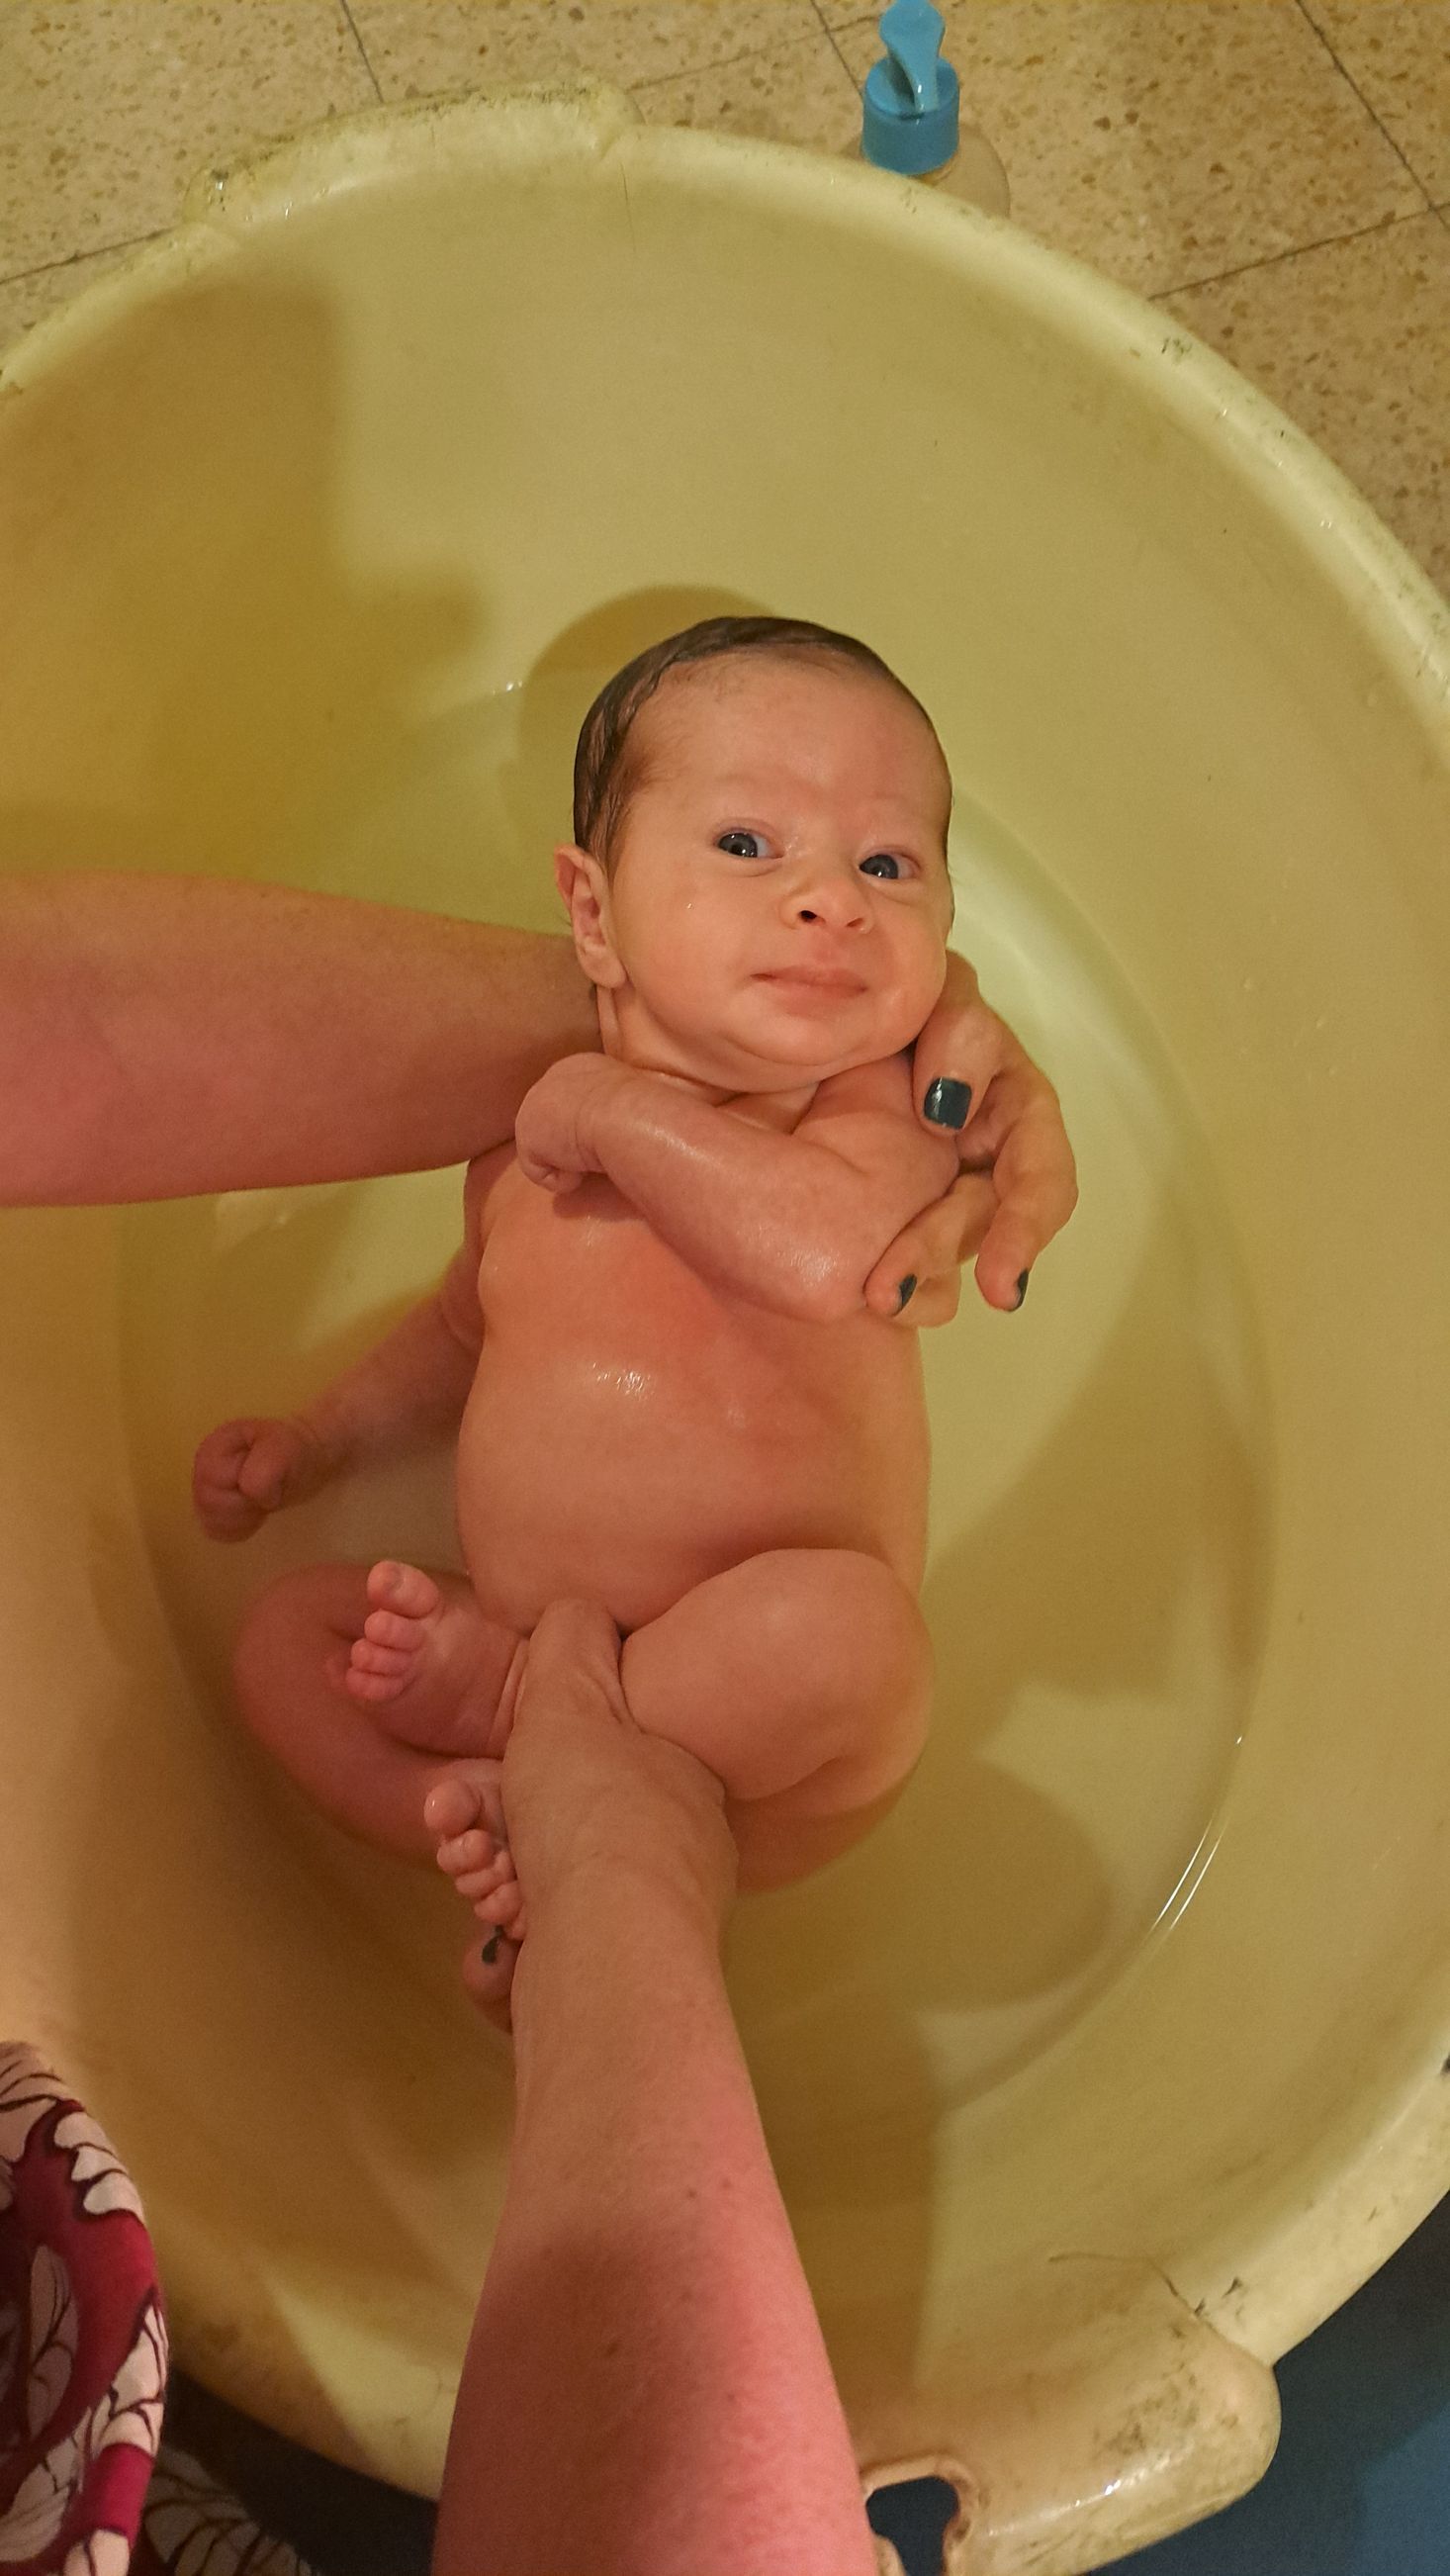 Baby in bath. Mother holds newborn in bath